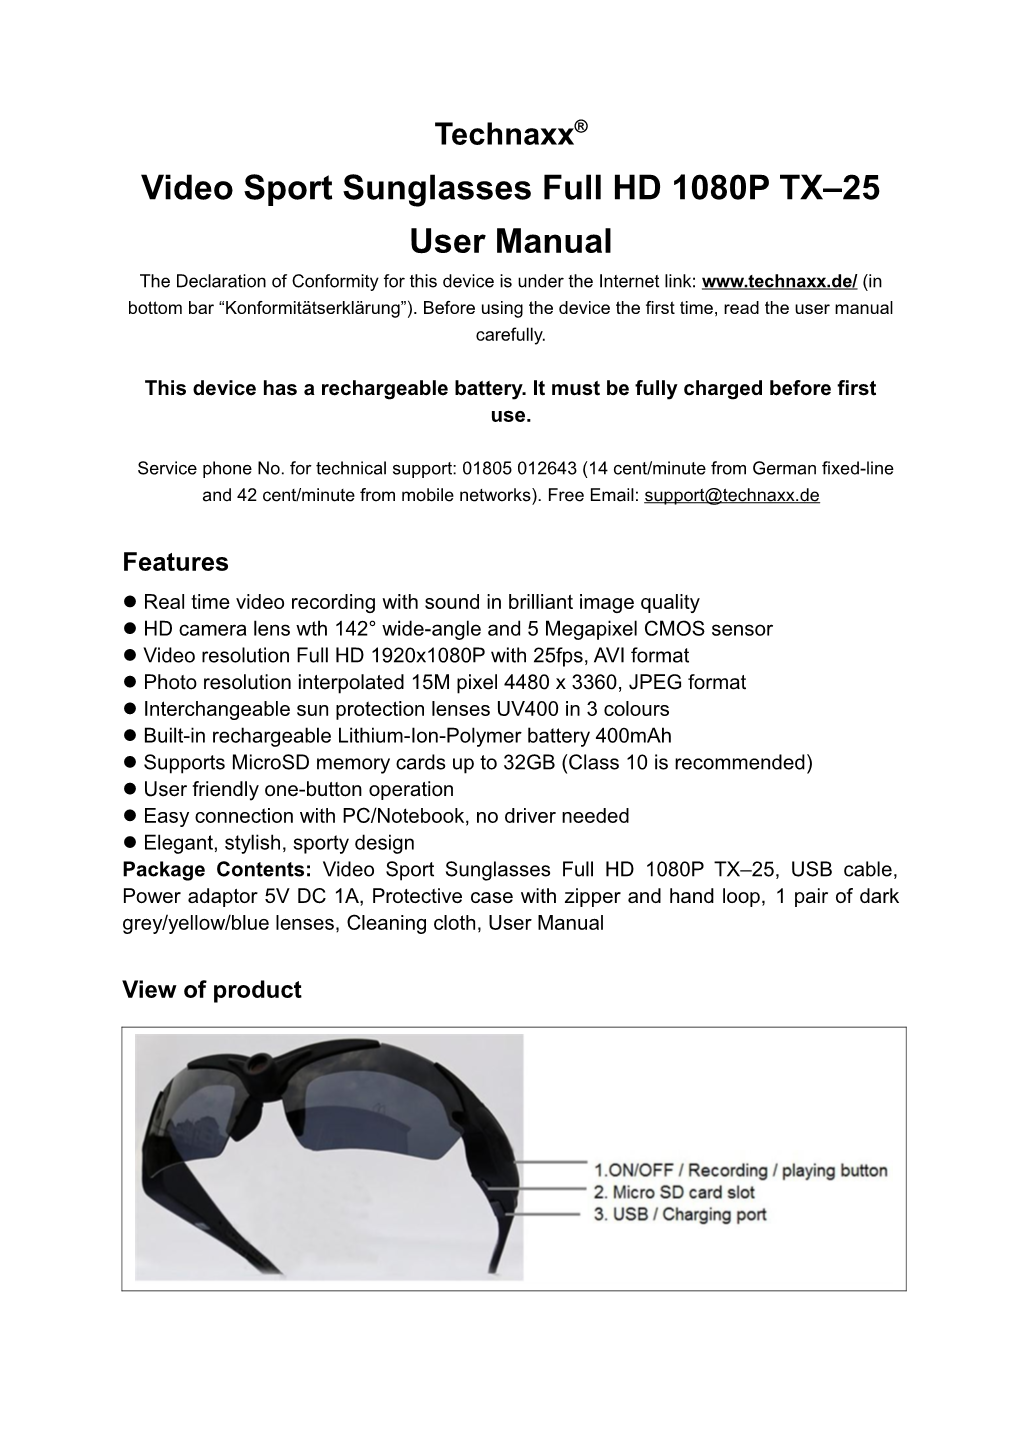 Video Sport Sunglasses Full HD 1080P TX 25User Manual